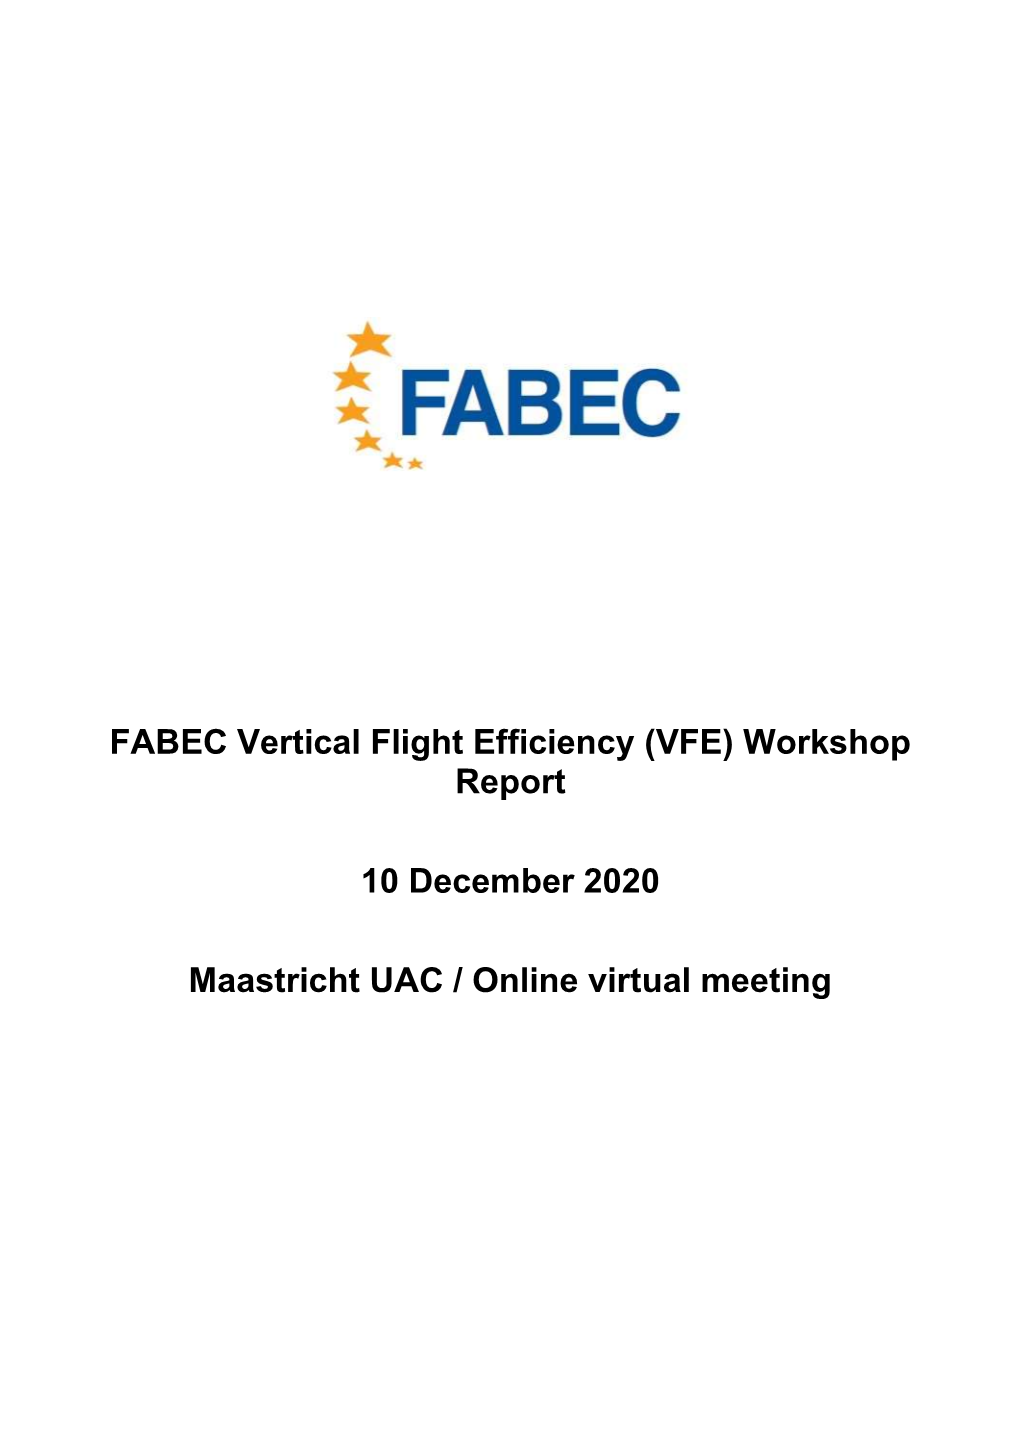 VFE Workshop Final Report